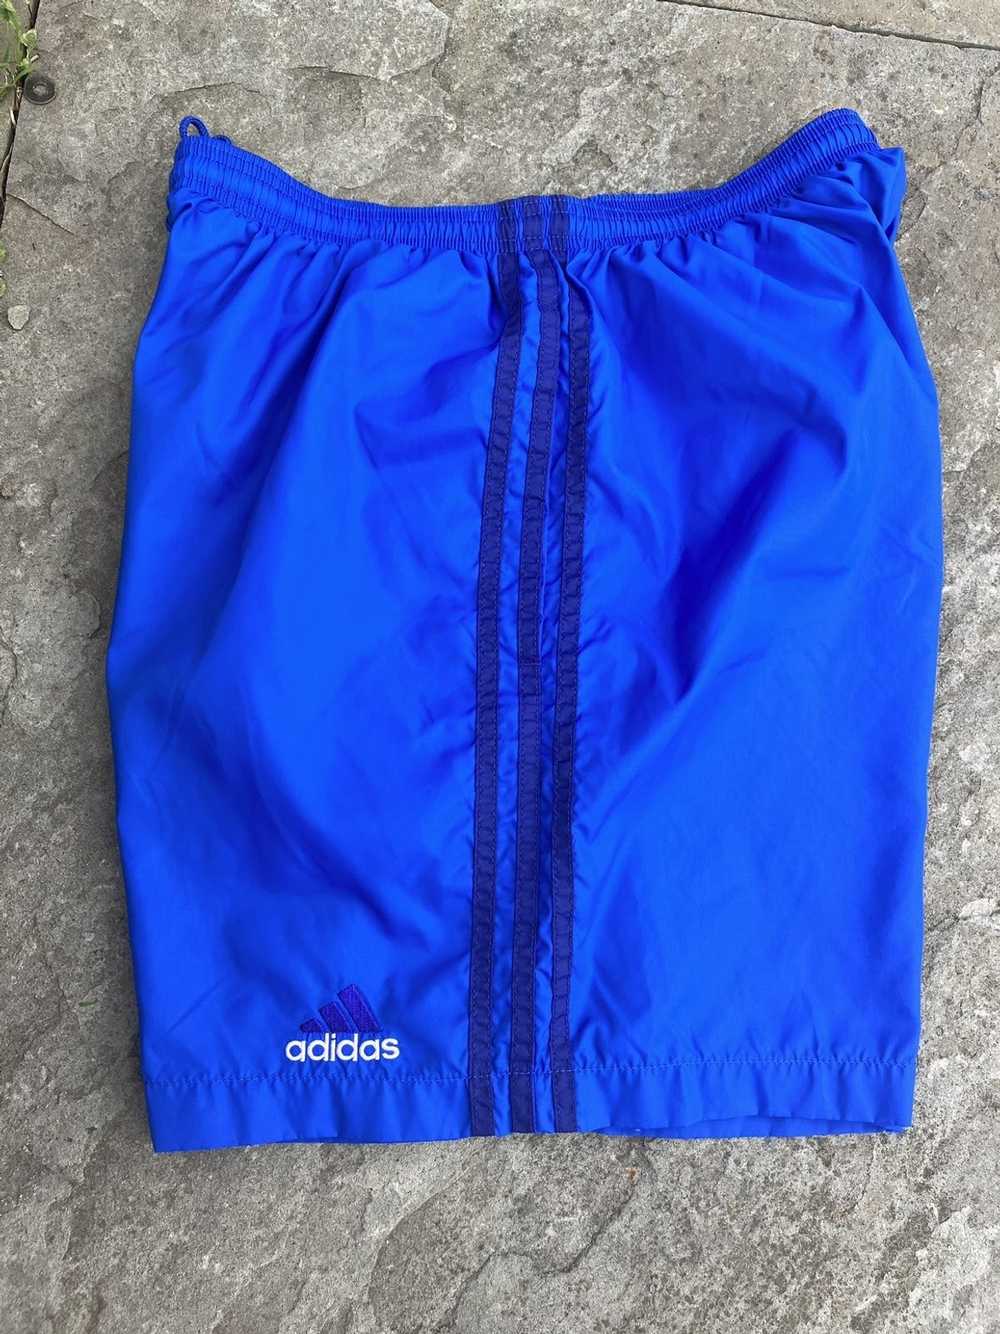 Adidas × Vintage Vintage 90s Adidas Nylon Shorts - image 5